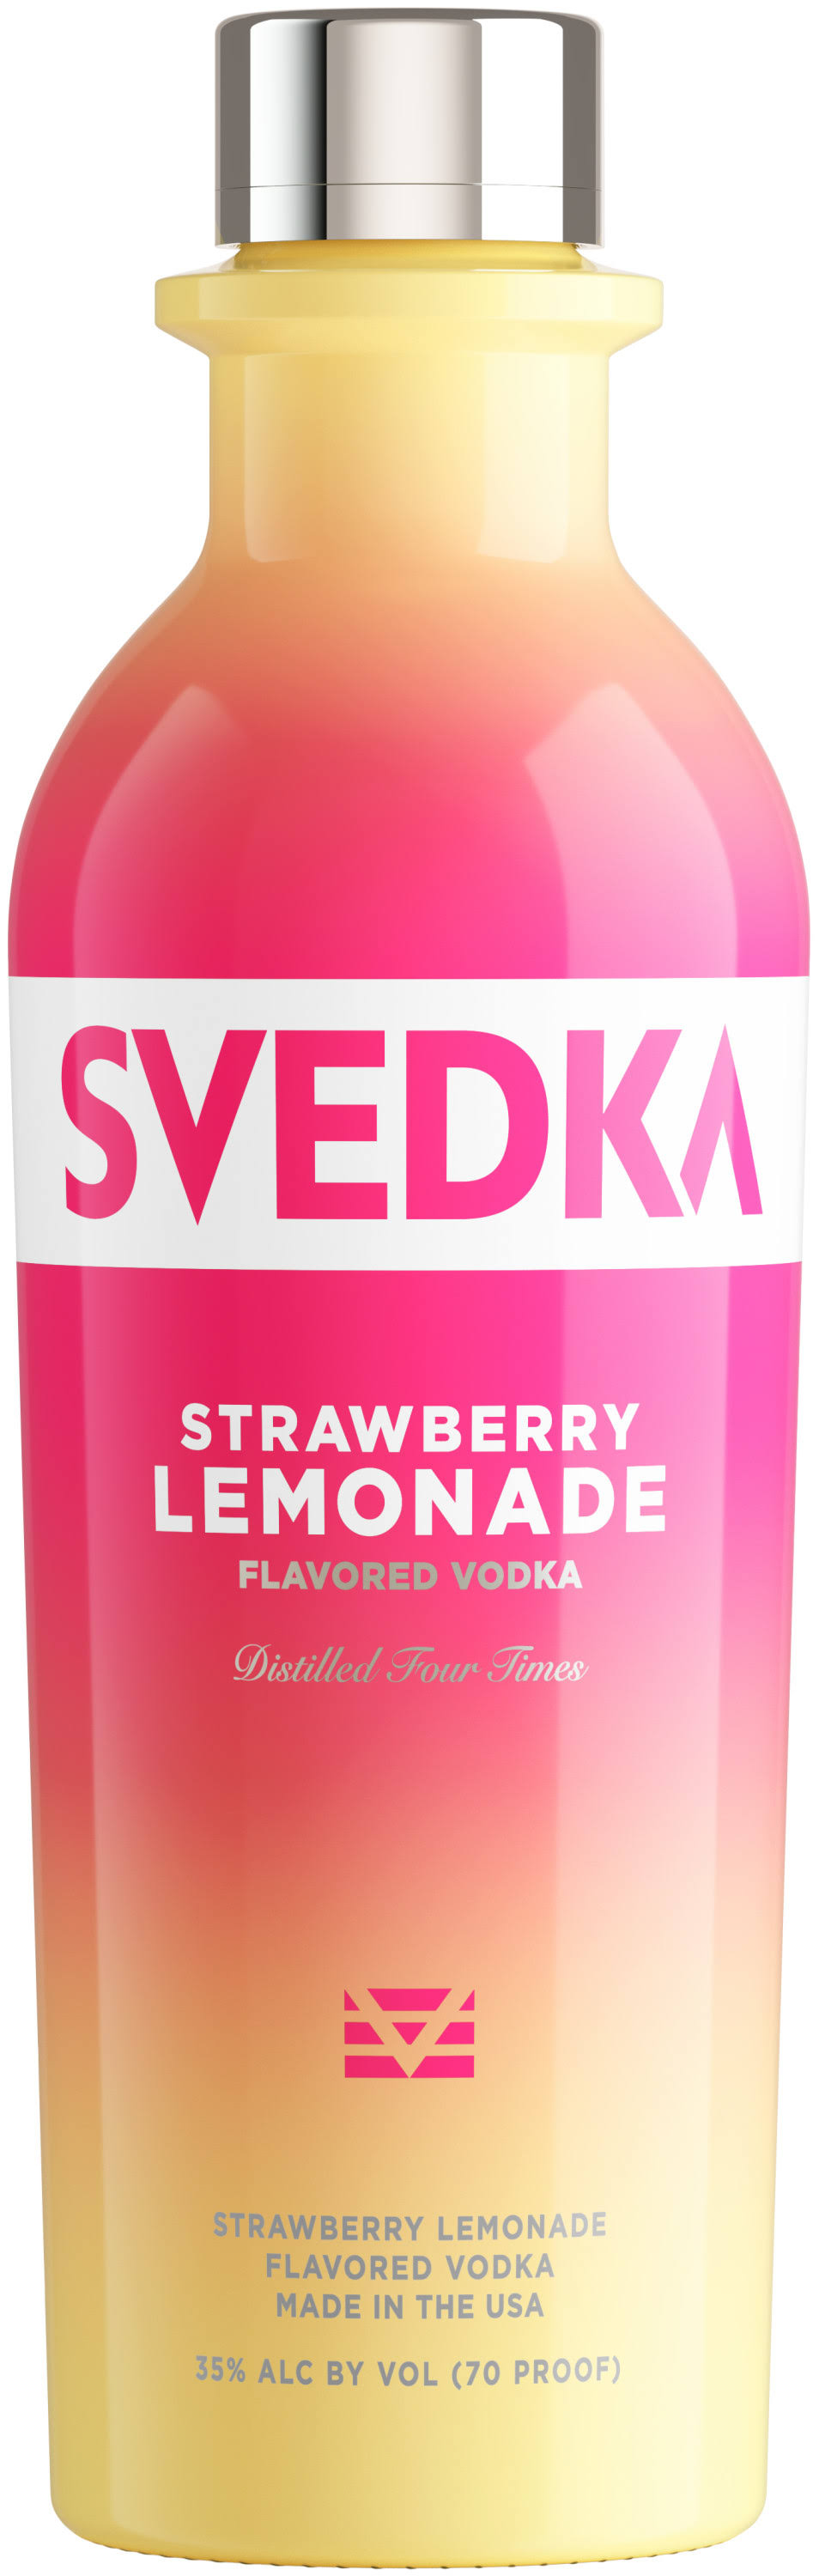 Svedka Vodka, Strawberry Lemonade Flavored - 375 ml